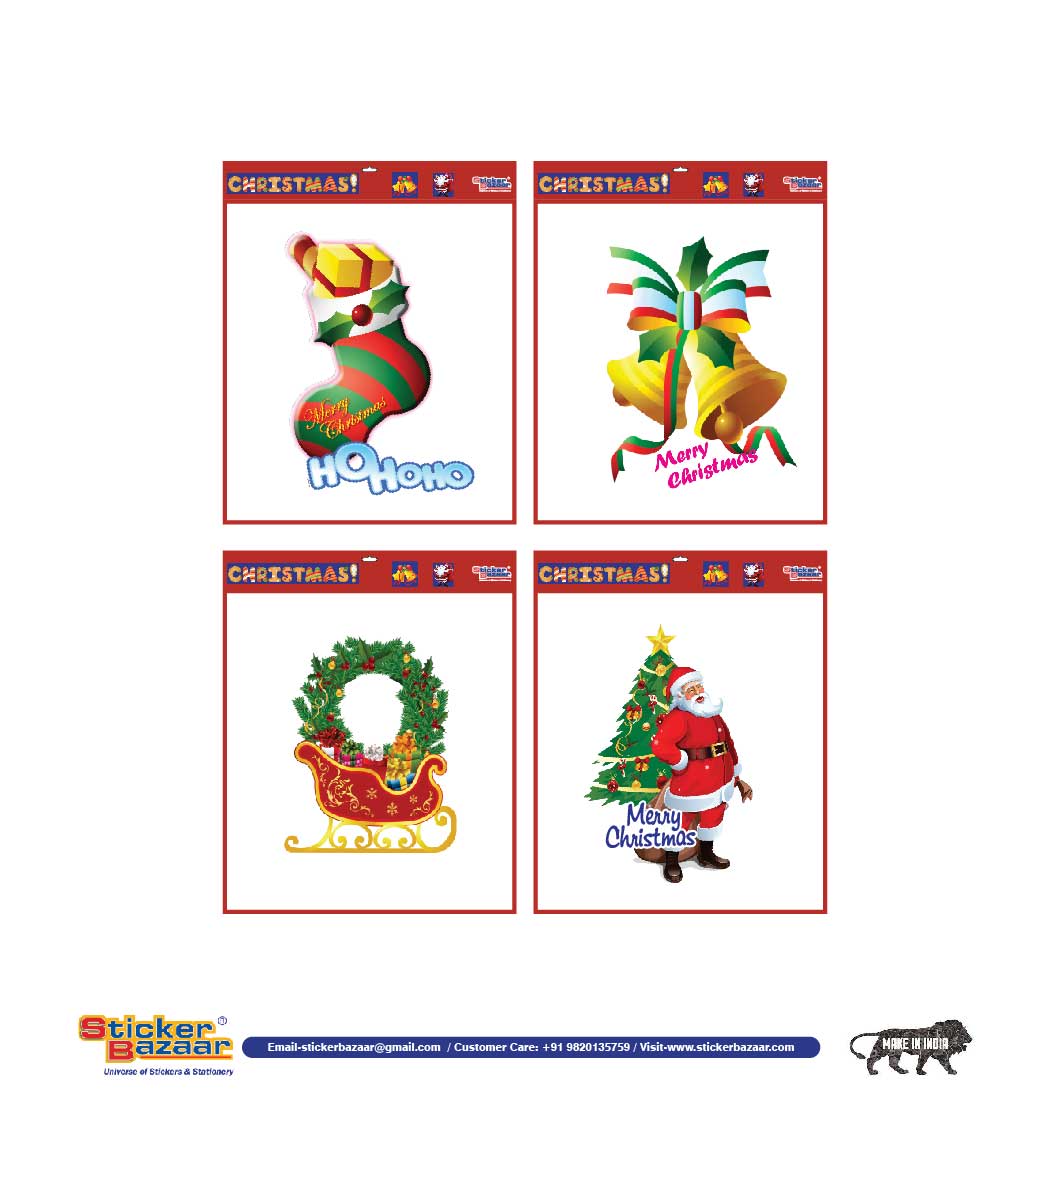 Sticker Bazaar Christmas Mini Cutout C1_2